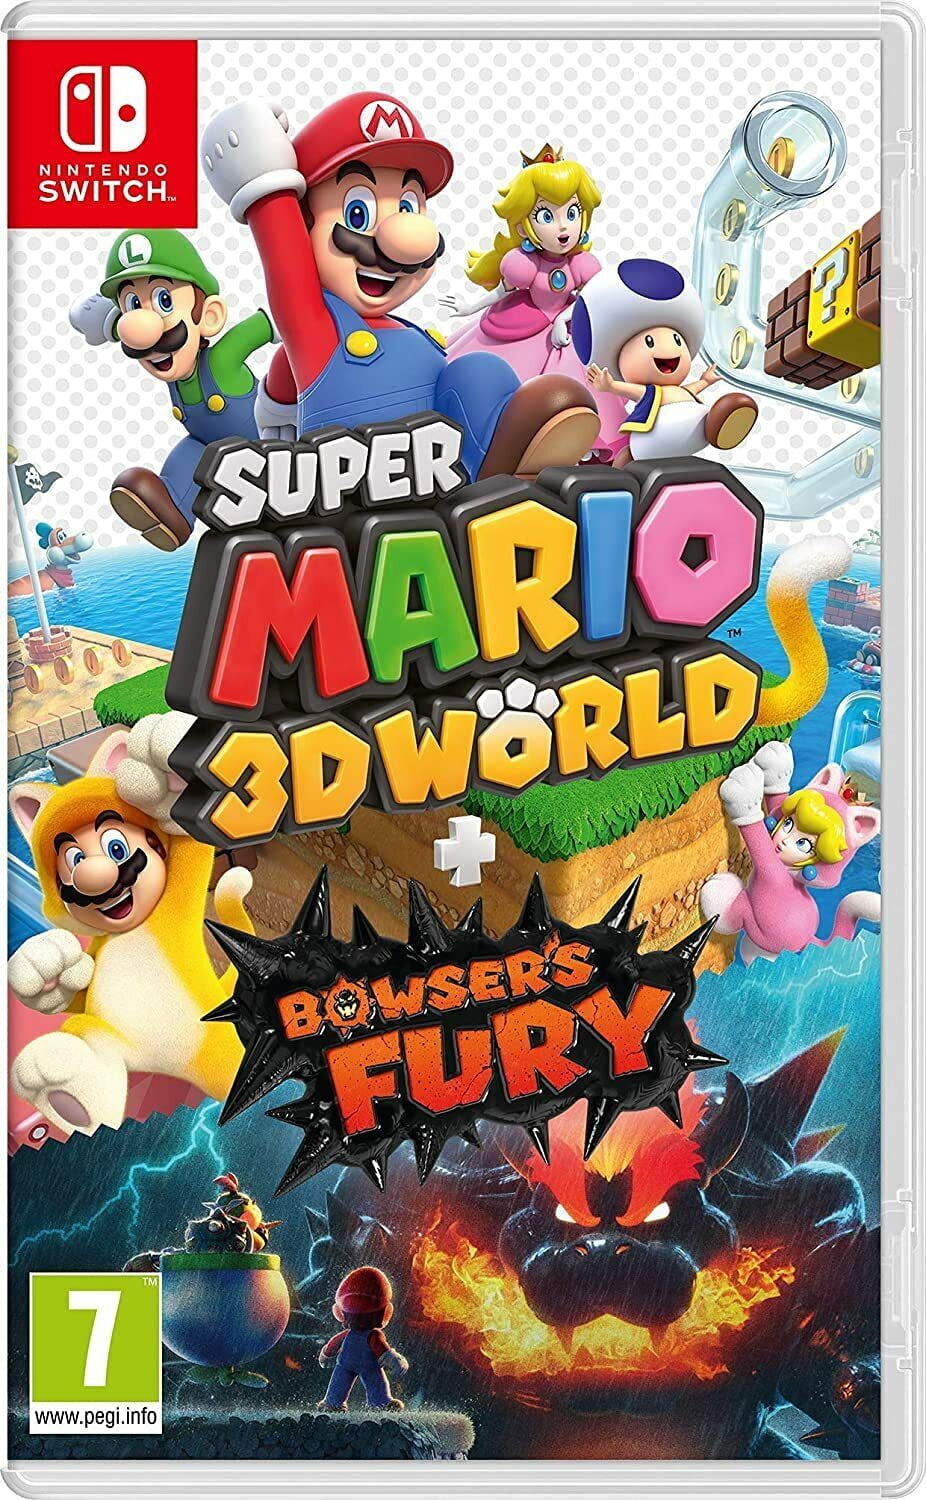 Ofertas Do Jogo Nintendo Switch-super Mario 3d All Star Collection- -  Ofertas De Jogos - AliExpress